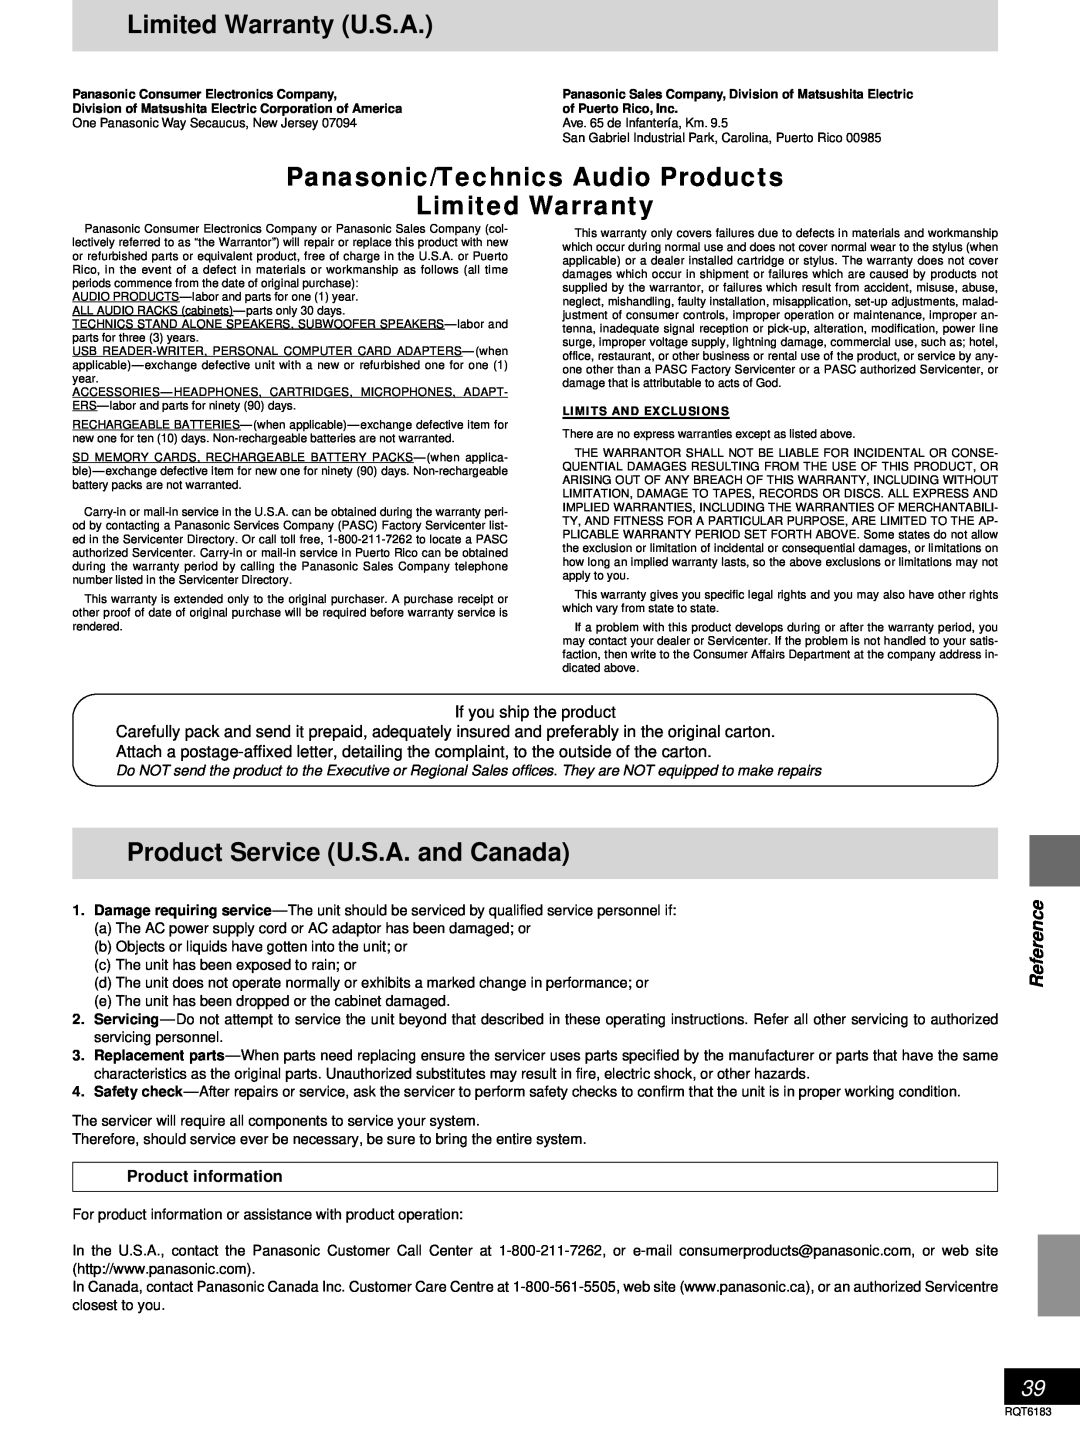 Panasonic SC-HT75 Limited Warranty U.S.A, Panasonic/Technics Audio Products, Product Service U.S.A. and Canada, Reference 